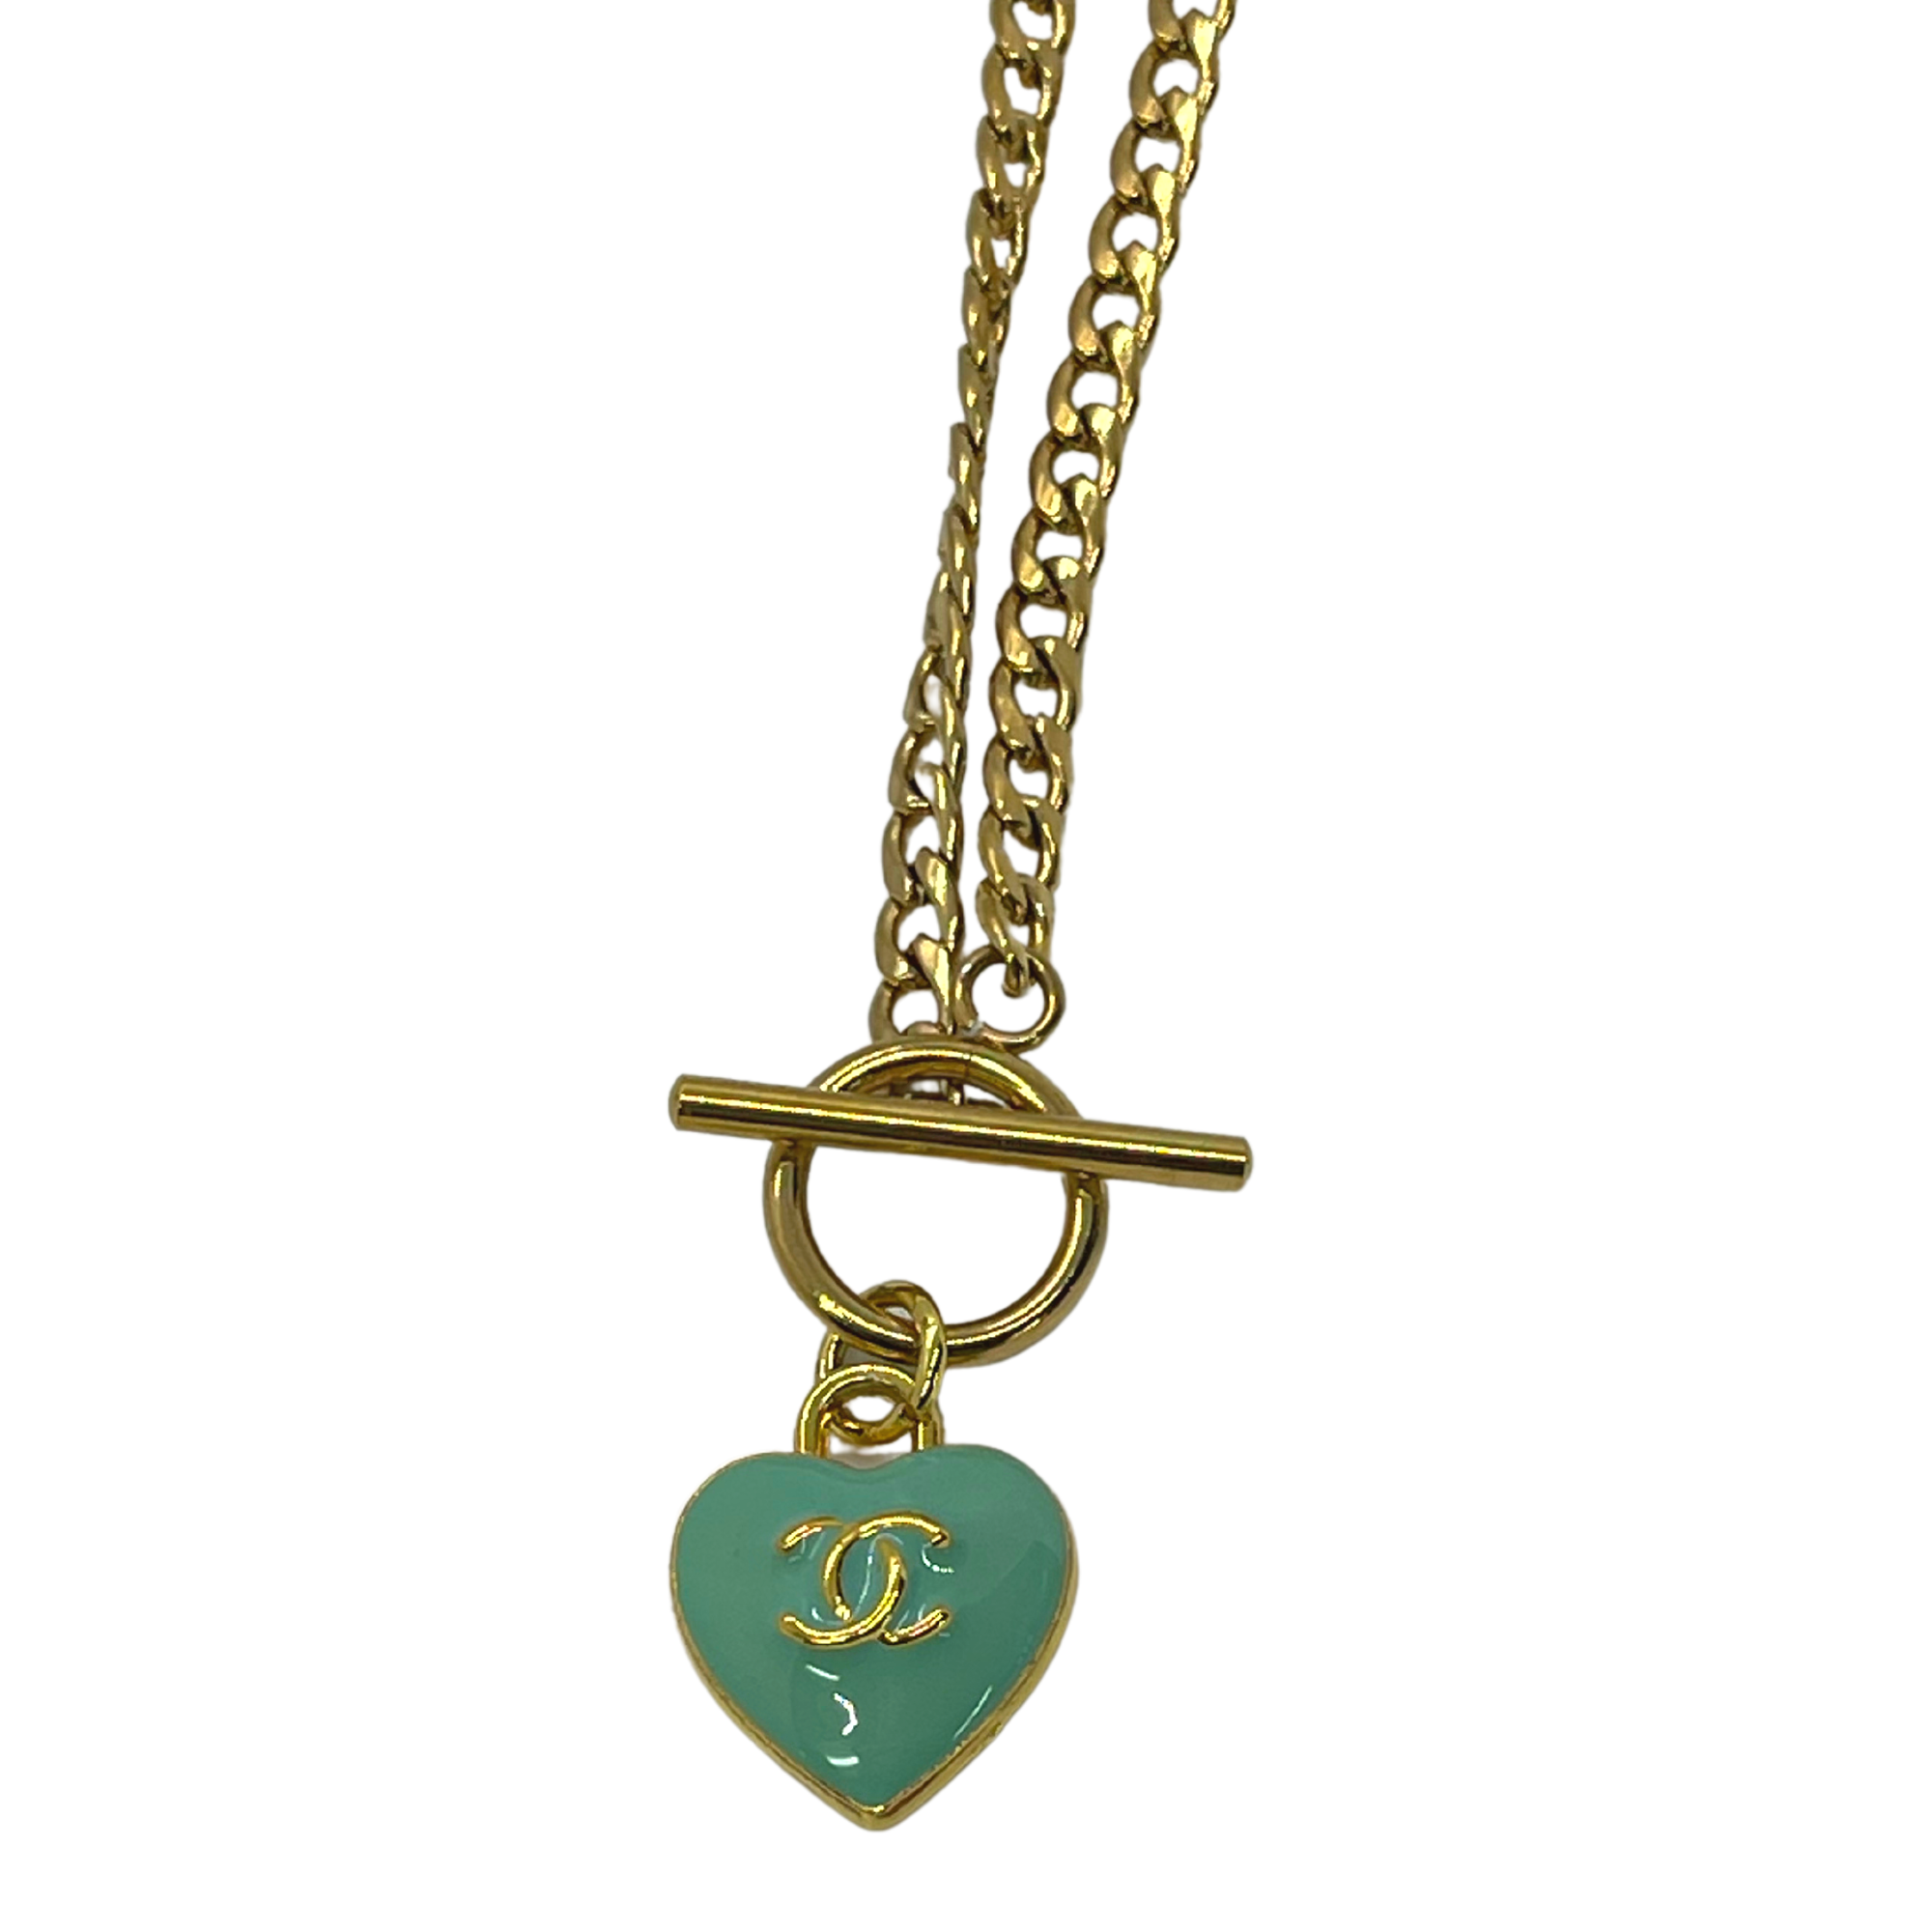 authentic chanel necklace vintage